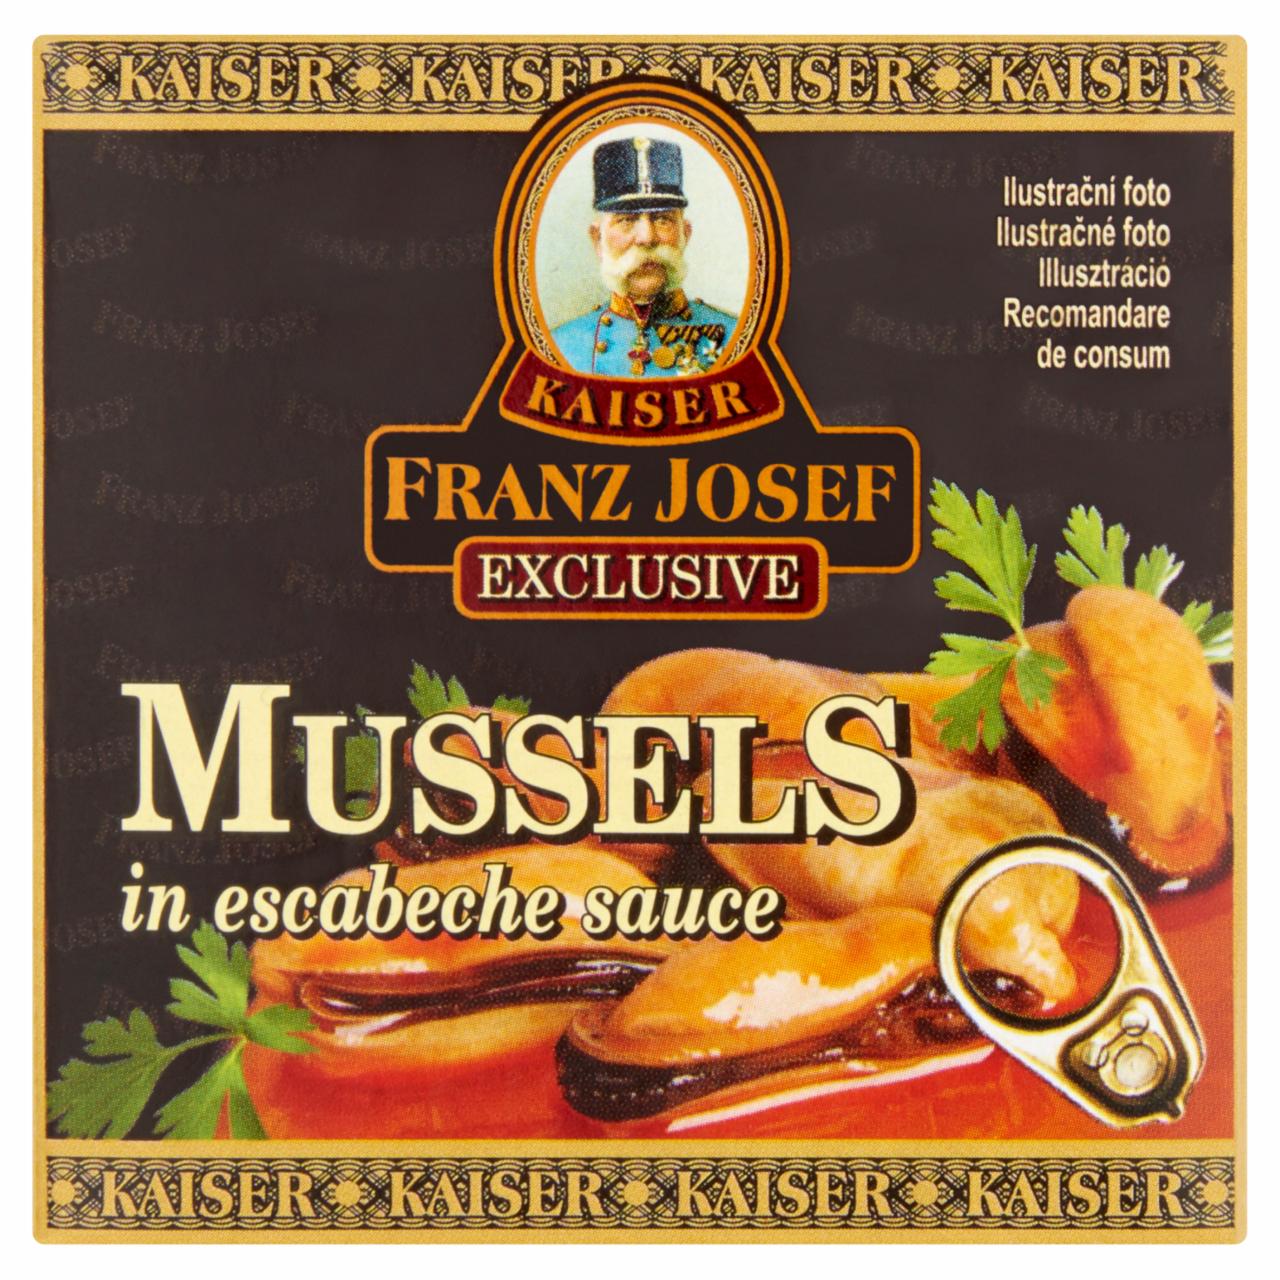 Photo - Kaiser Franz Josef Exclusive Mussels in Escabeche Sauce 80 g